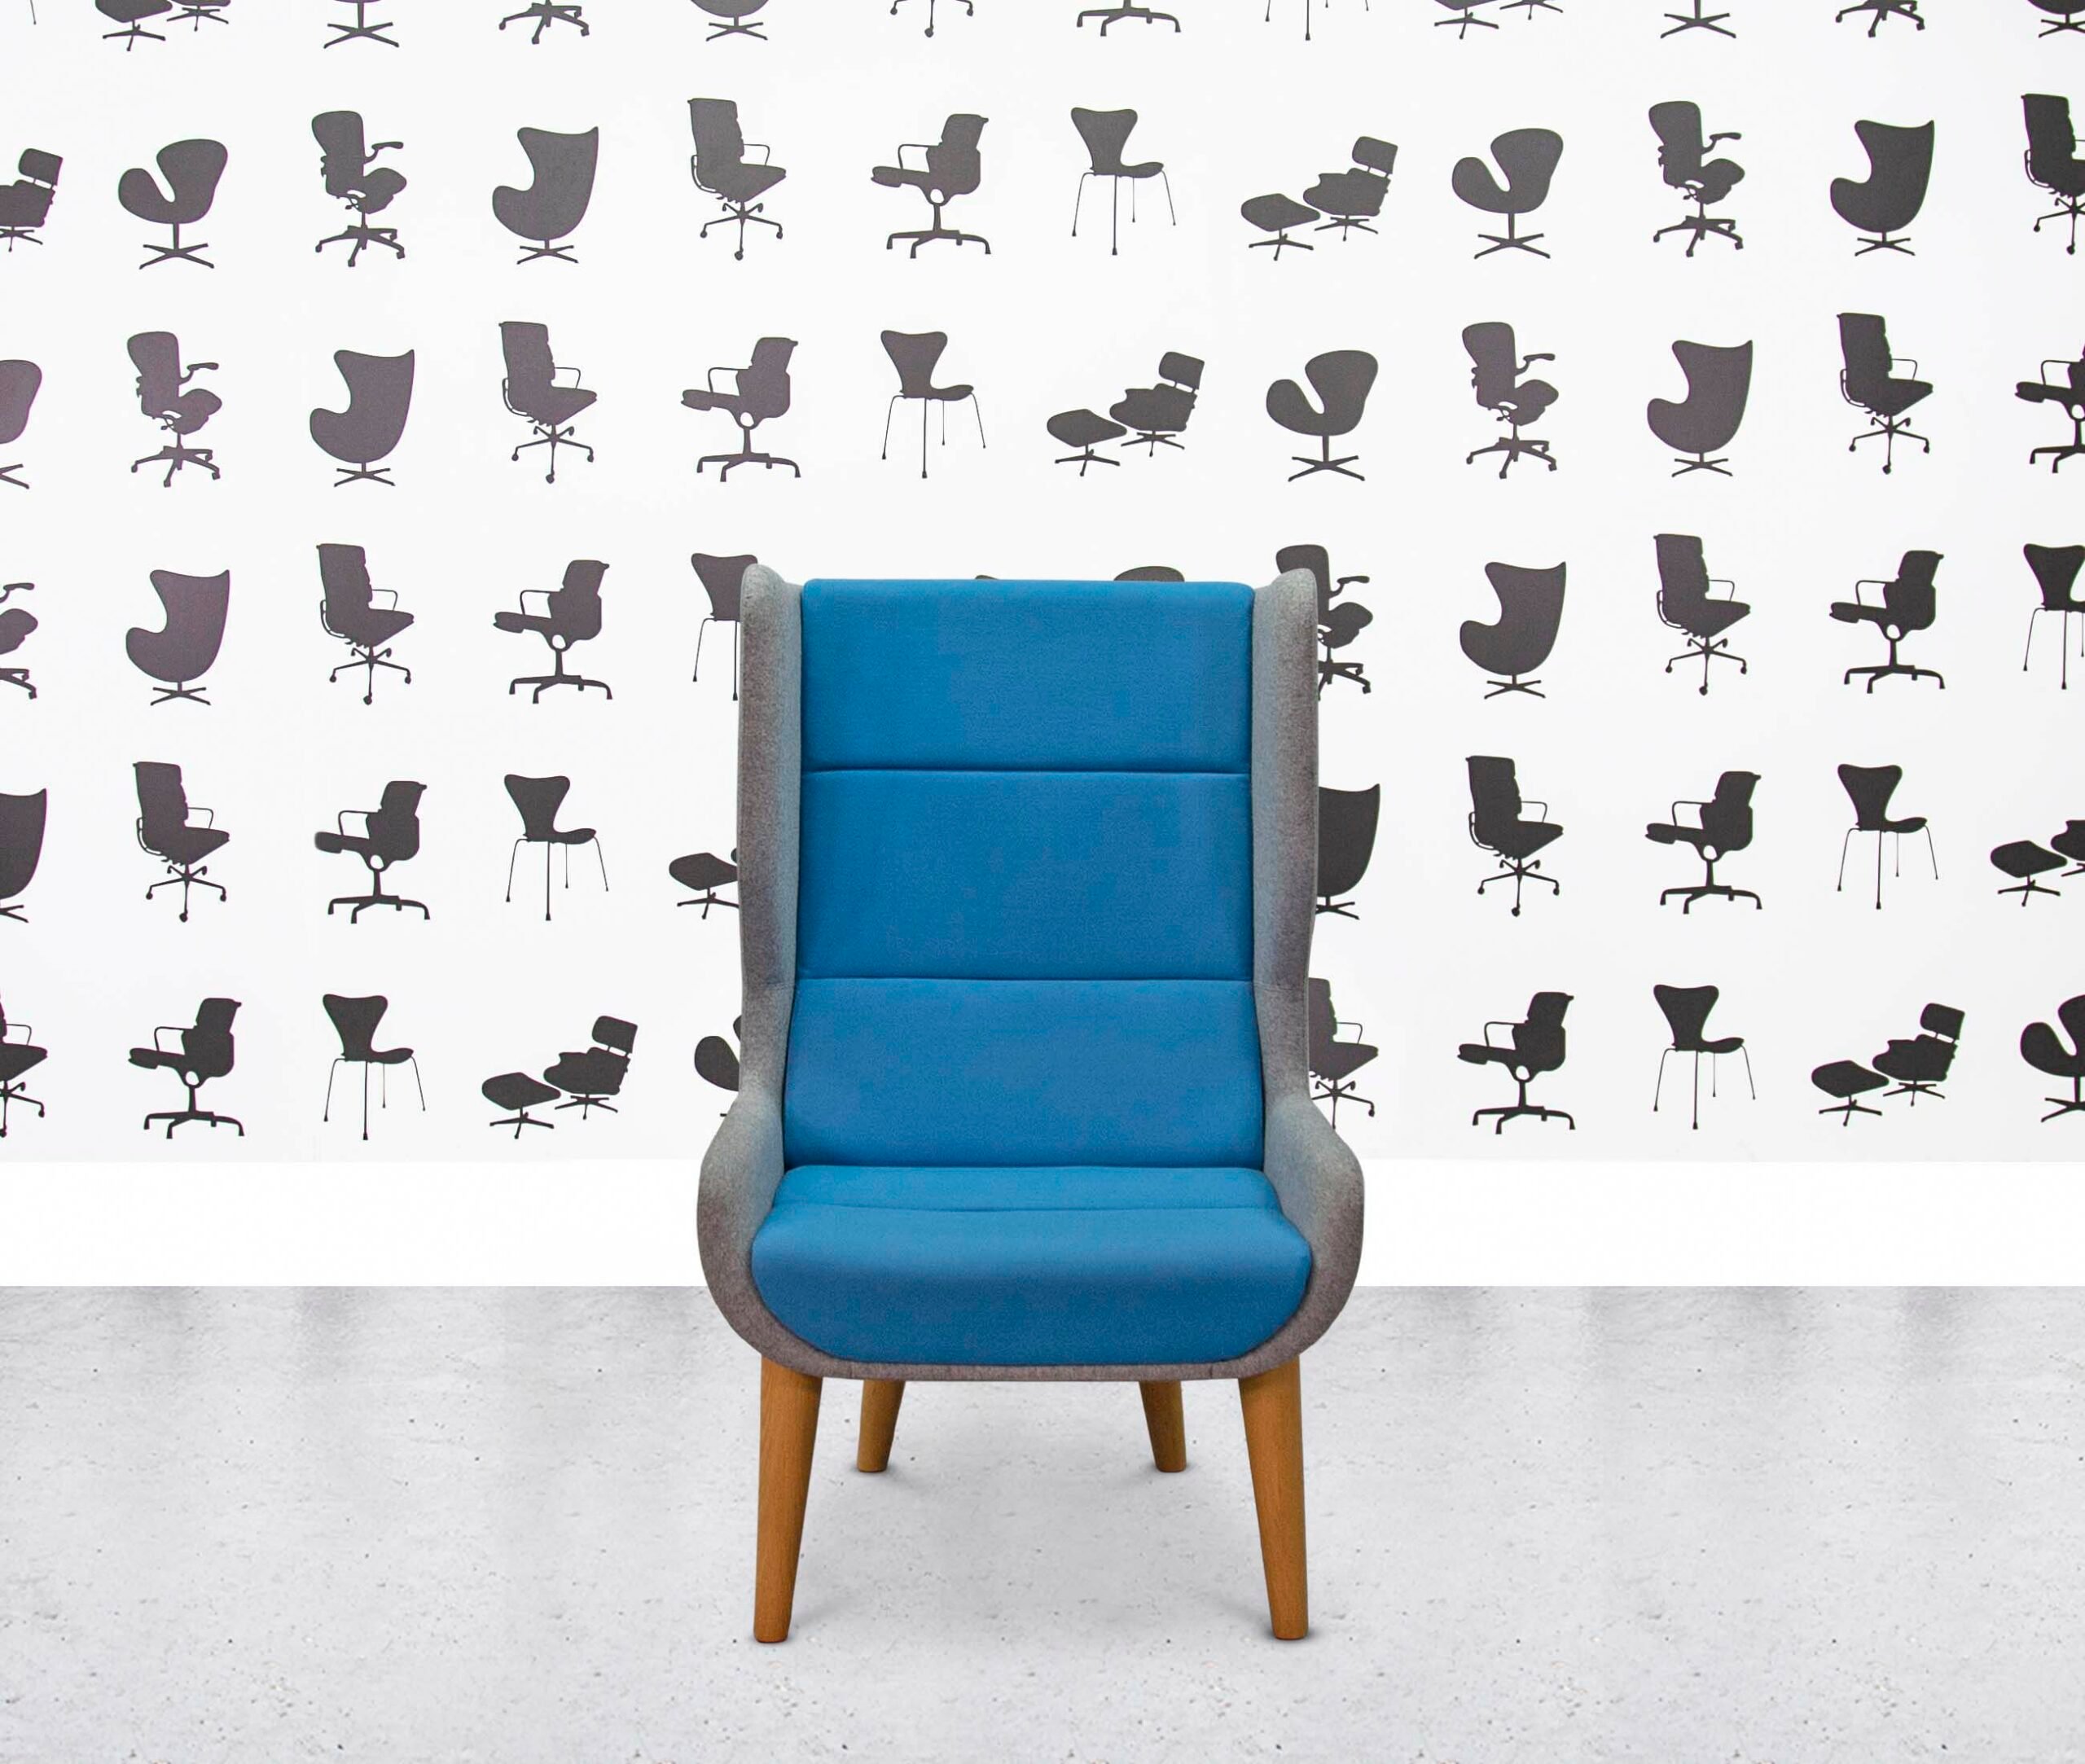 Refurbished Naughtone Hush BWD Lounge Chair - Blue and Grey Fabric